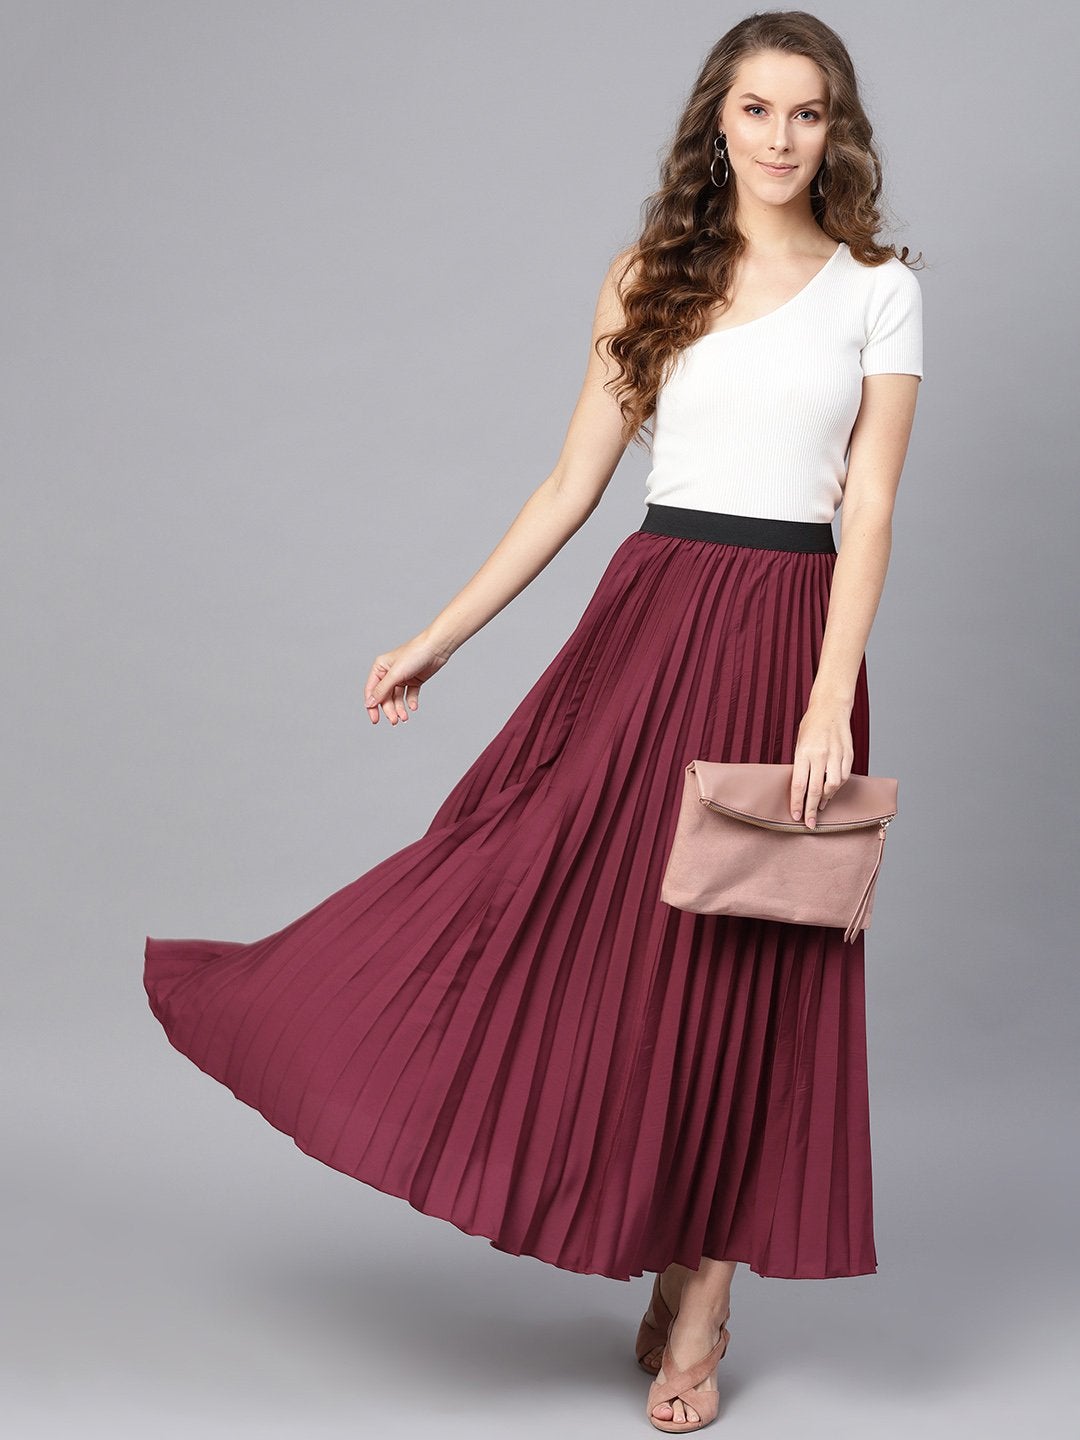 Women's Burgundy Pleated Maxi Skirt - SASSAFRAS